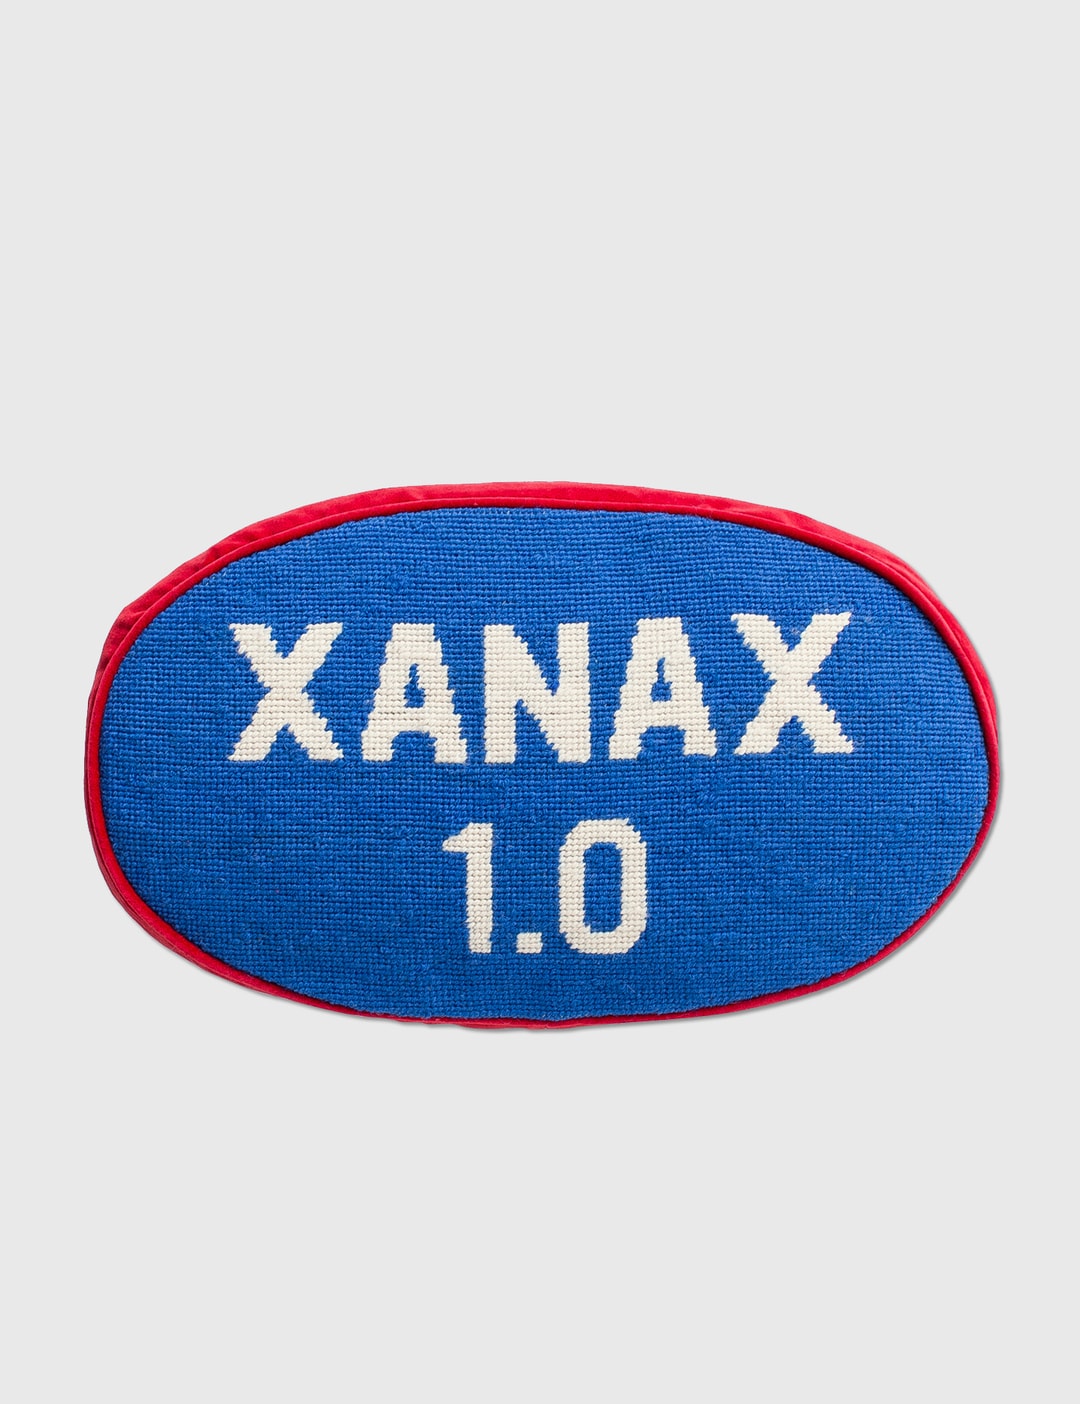 Prescription Xanax Cushion Placeholder Image